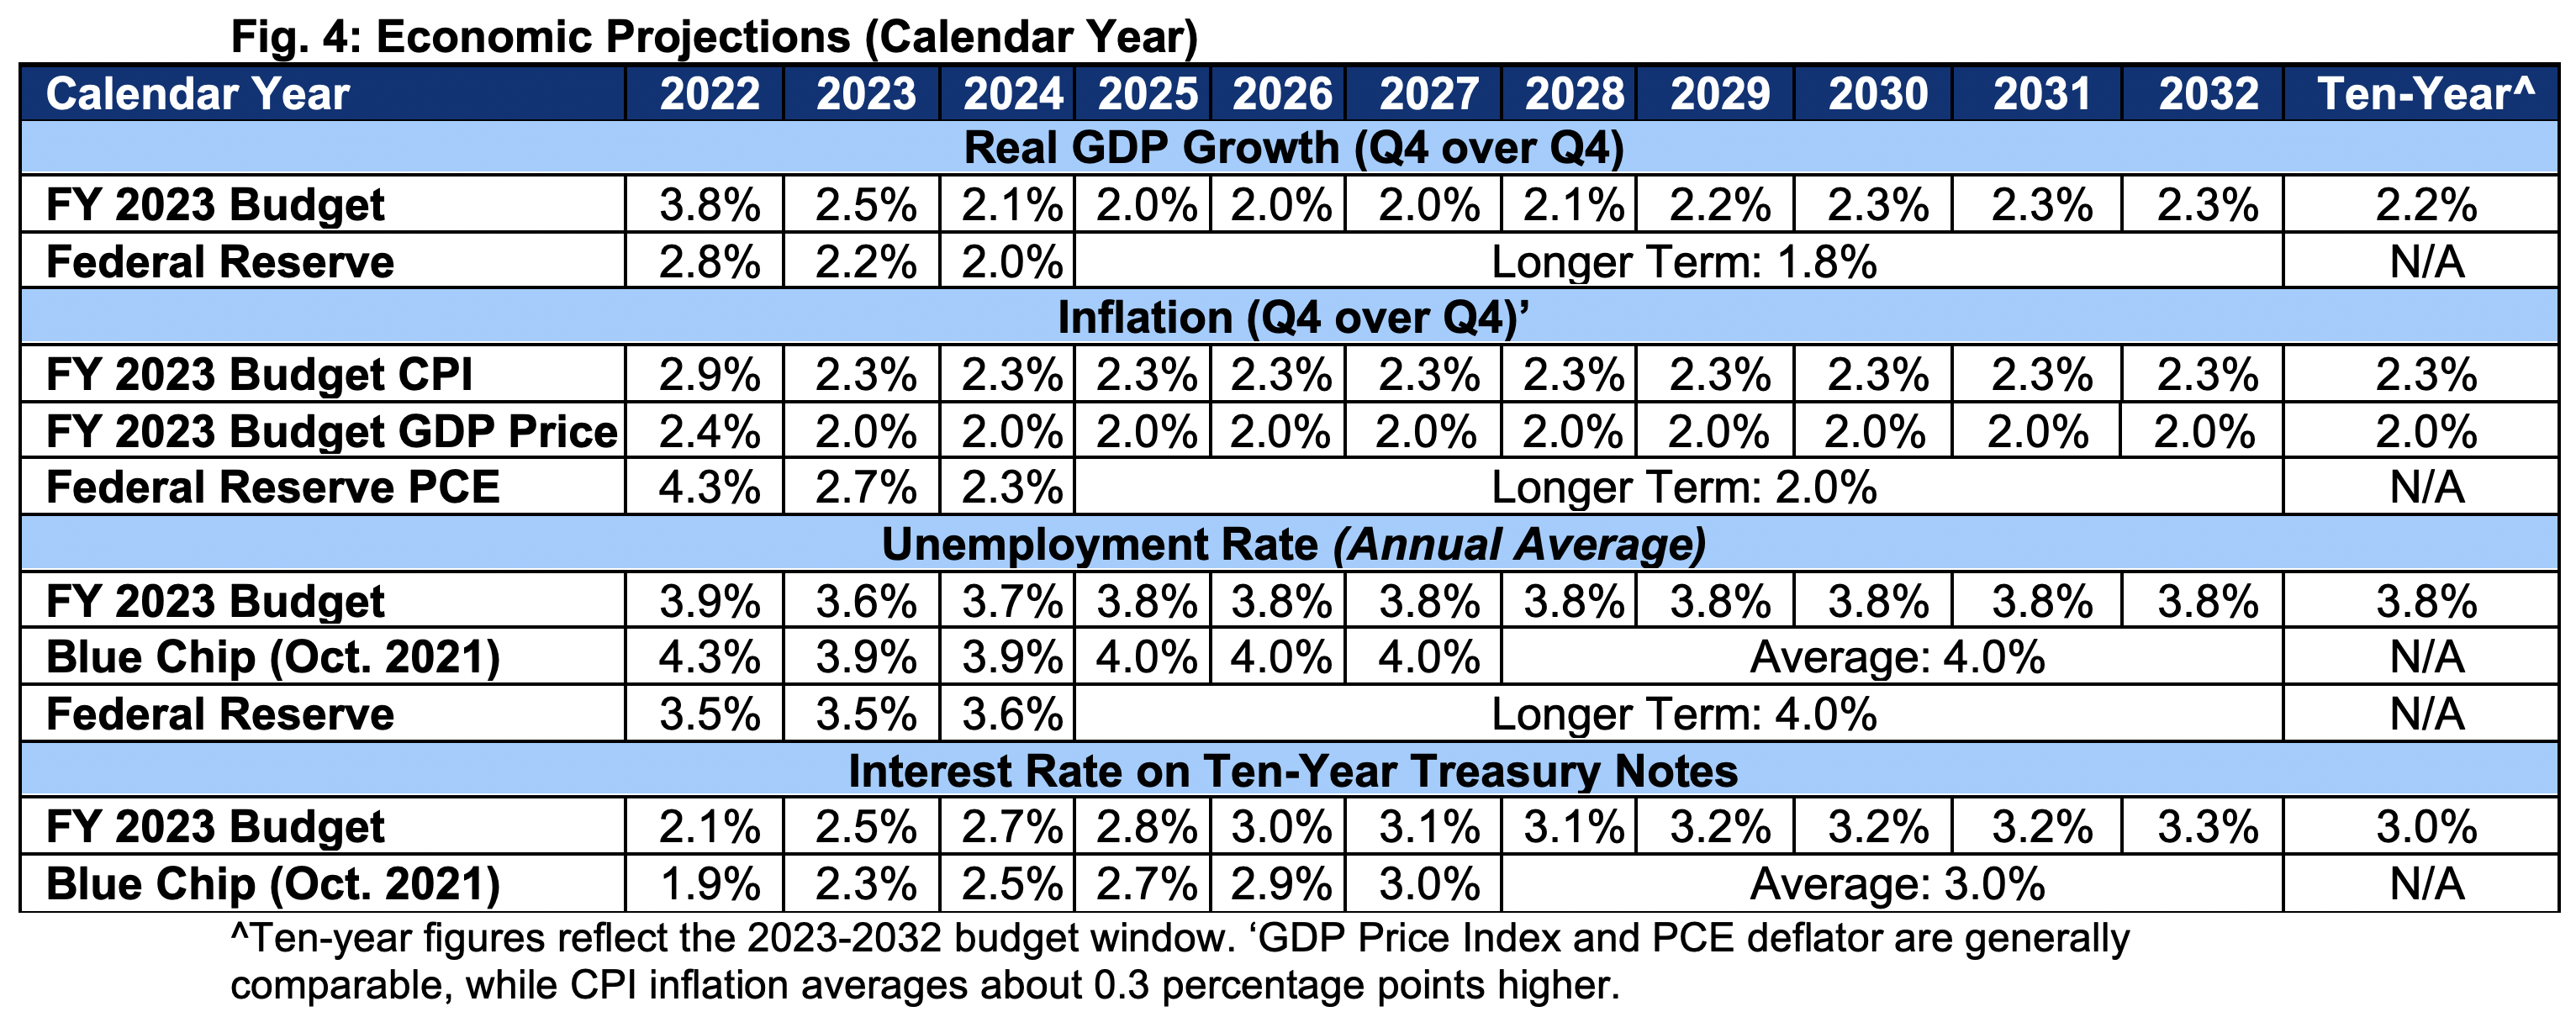 Economic Projections (Calendar Year) 